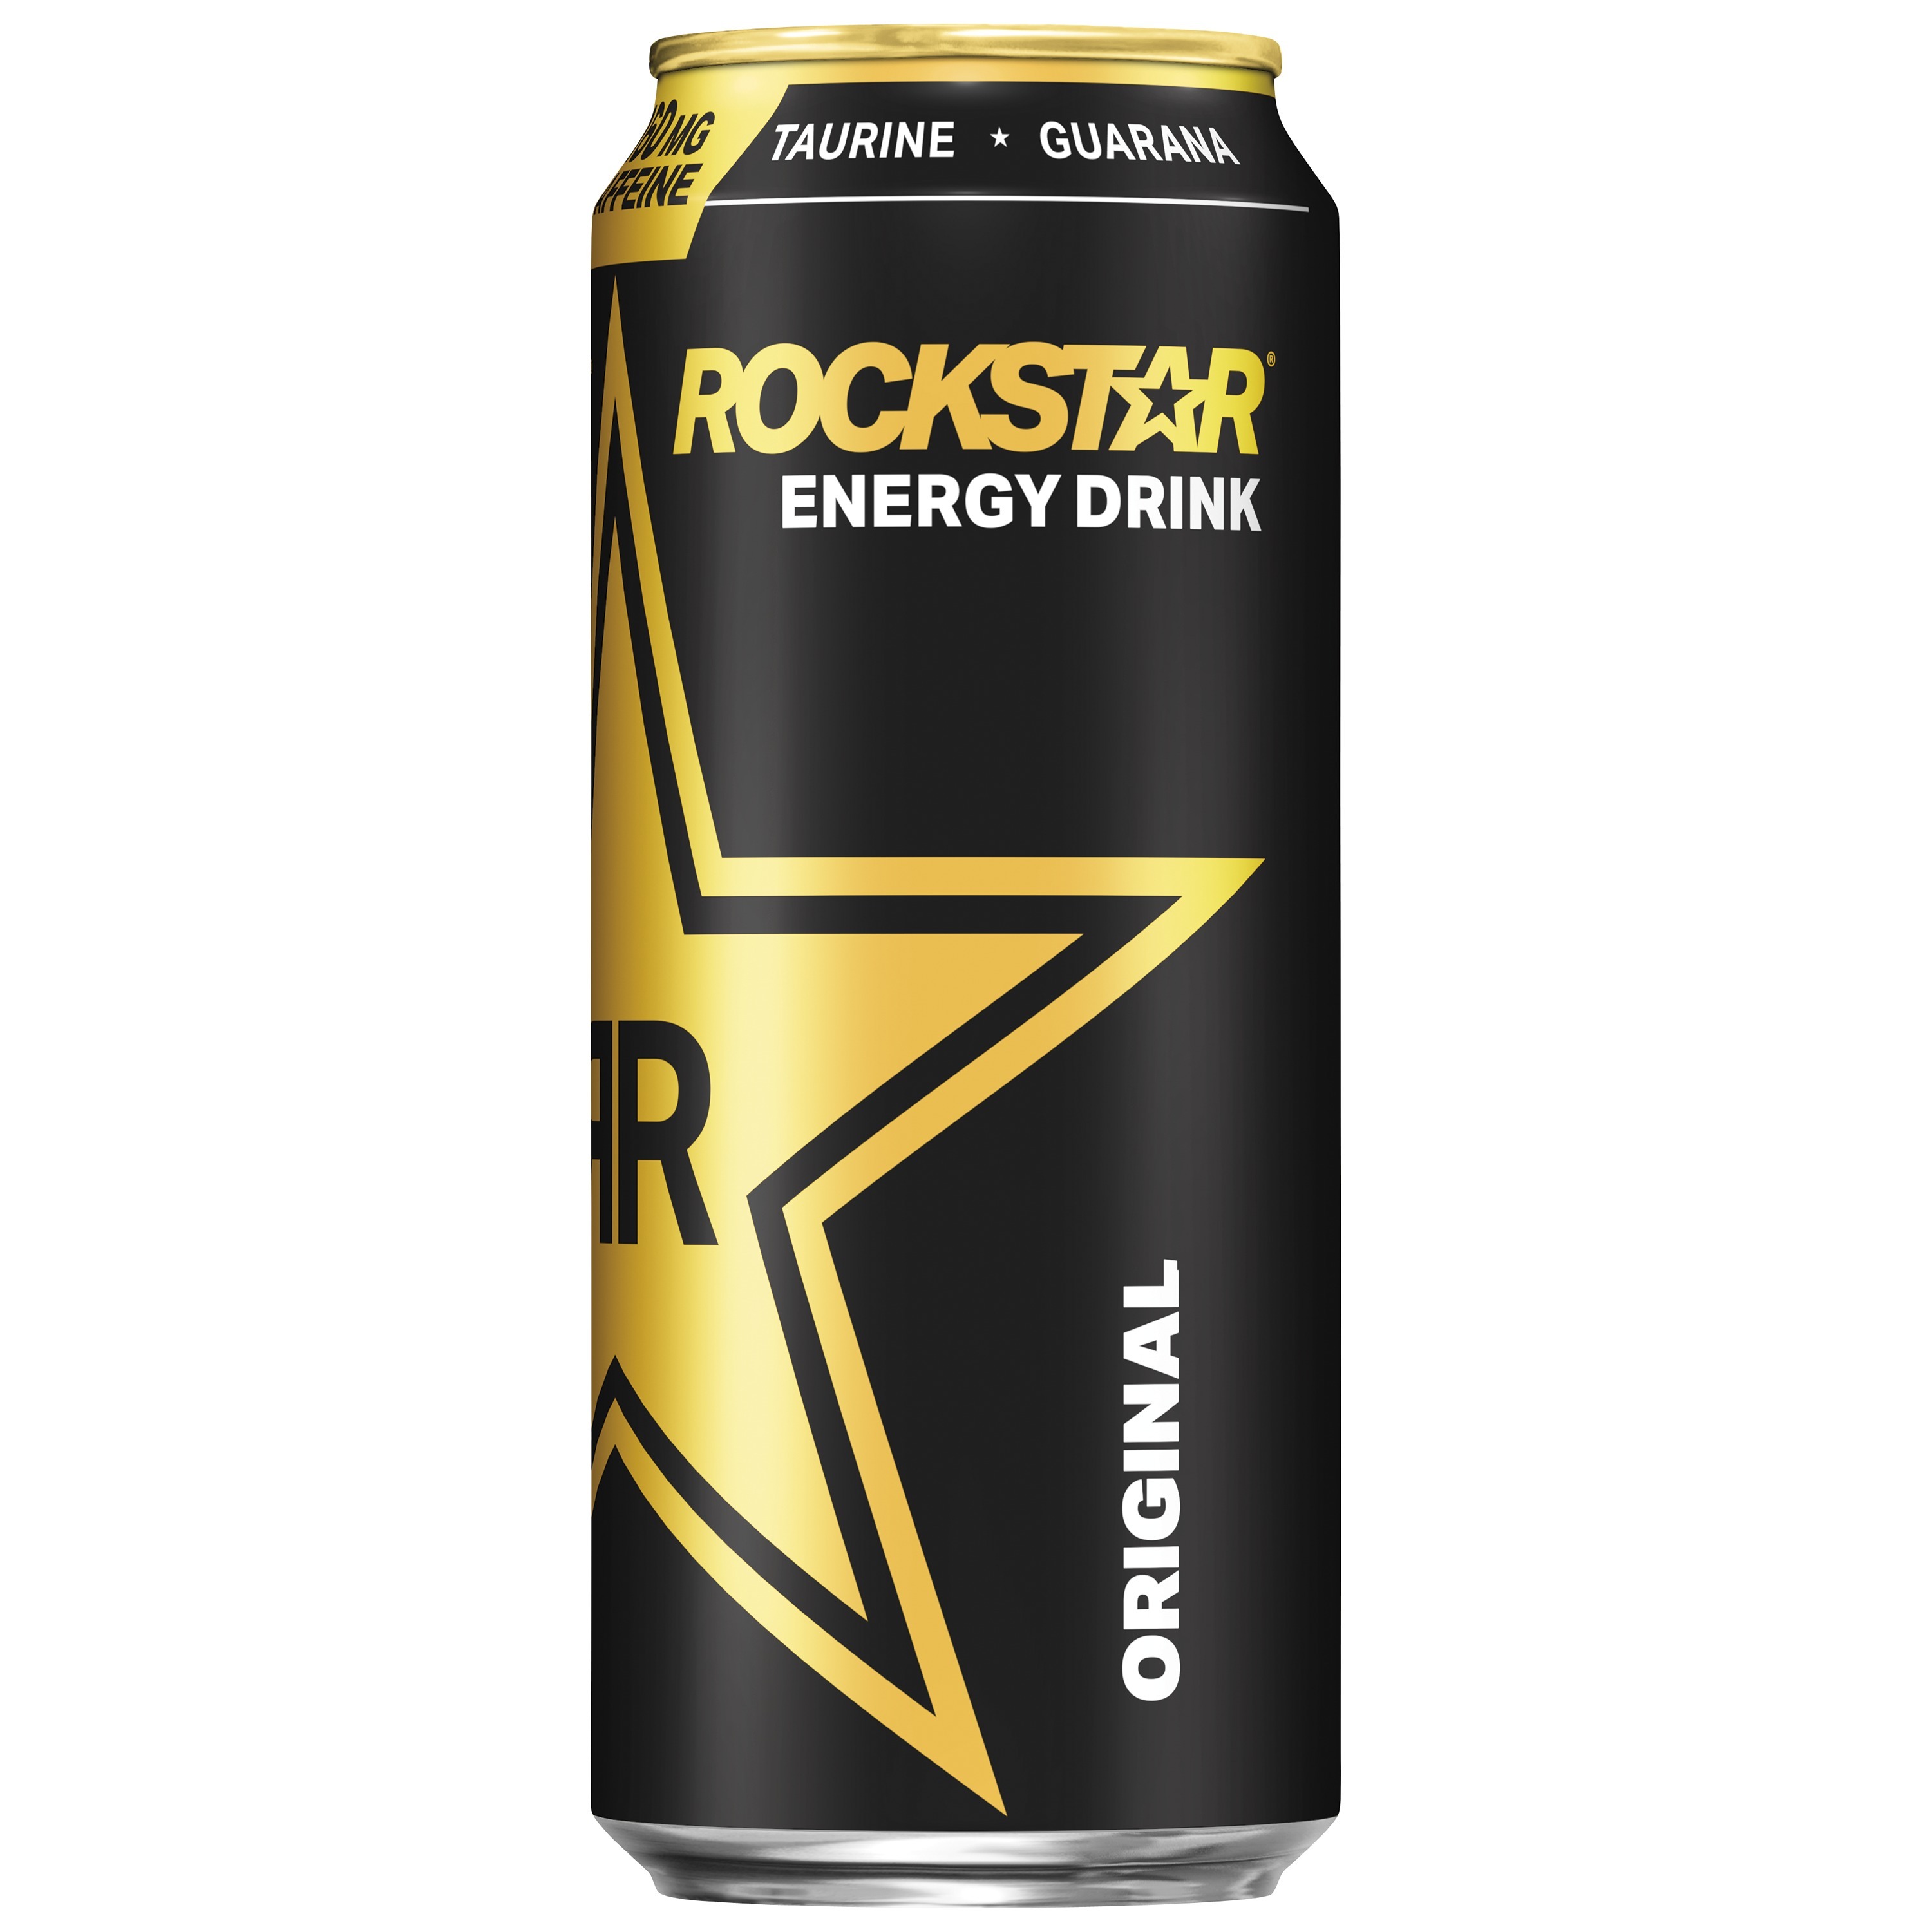 Rockstar, Brands of the World™